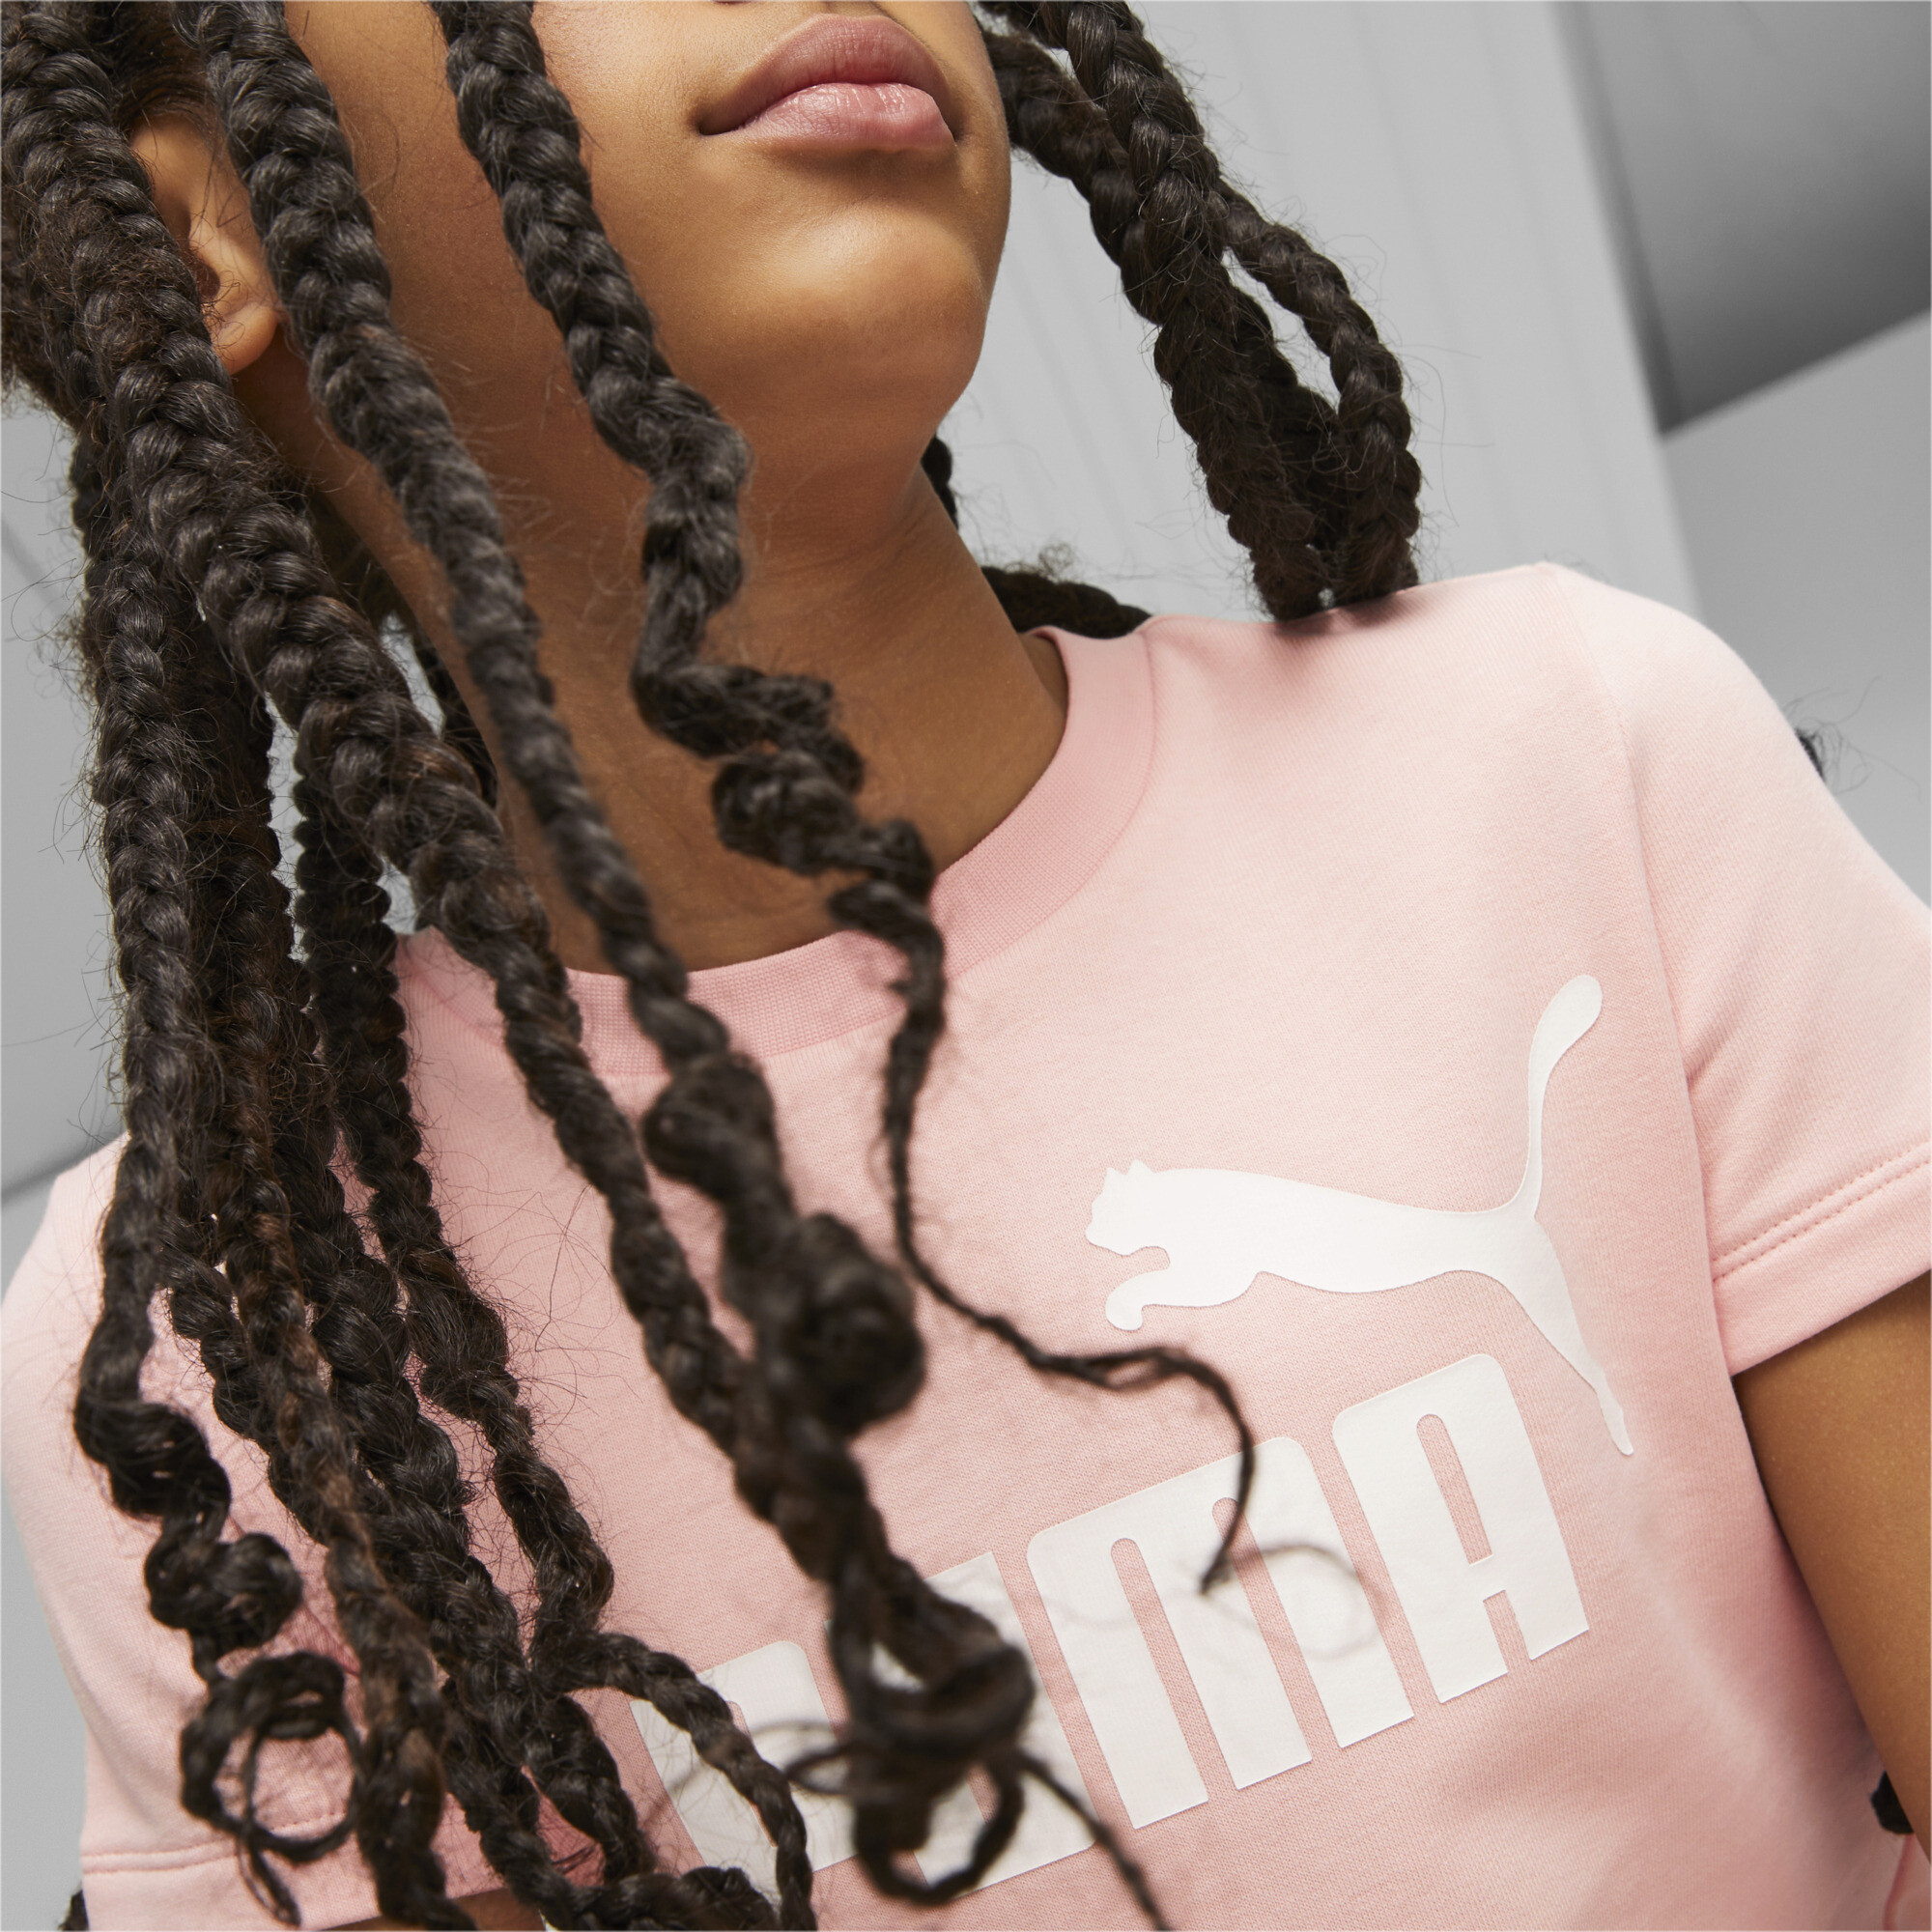 Women's Puma Essentials+ Logo Dress Youth, Pink, Size 15-16Y, Clothing